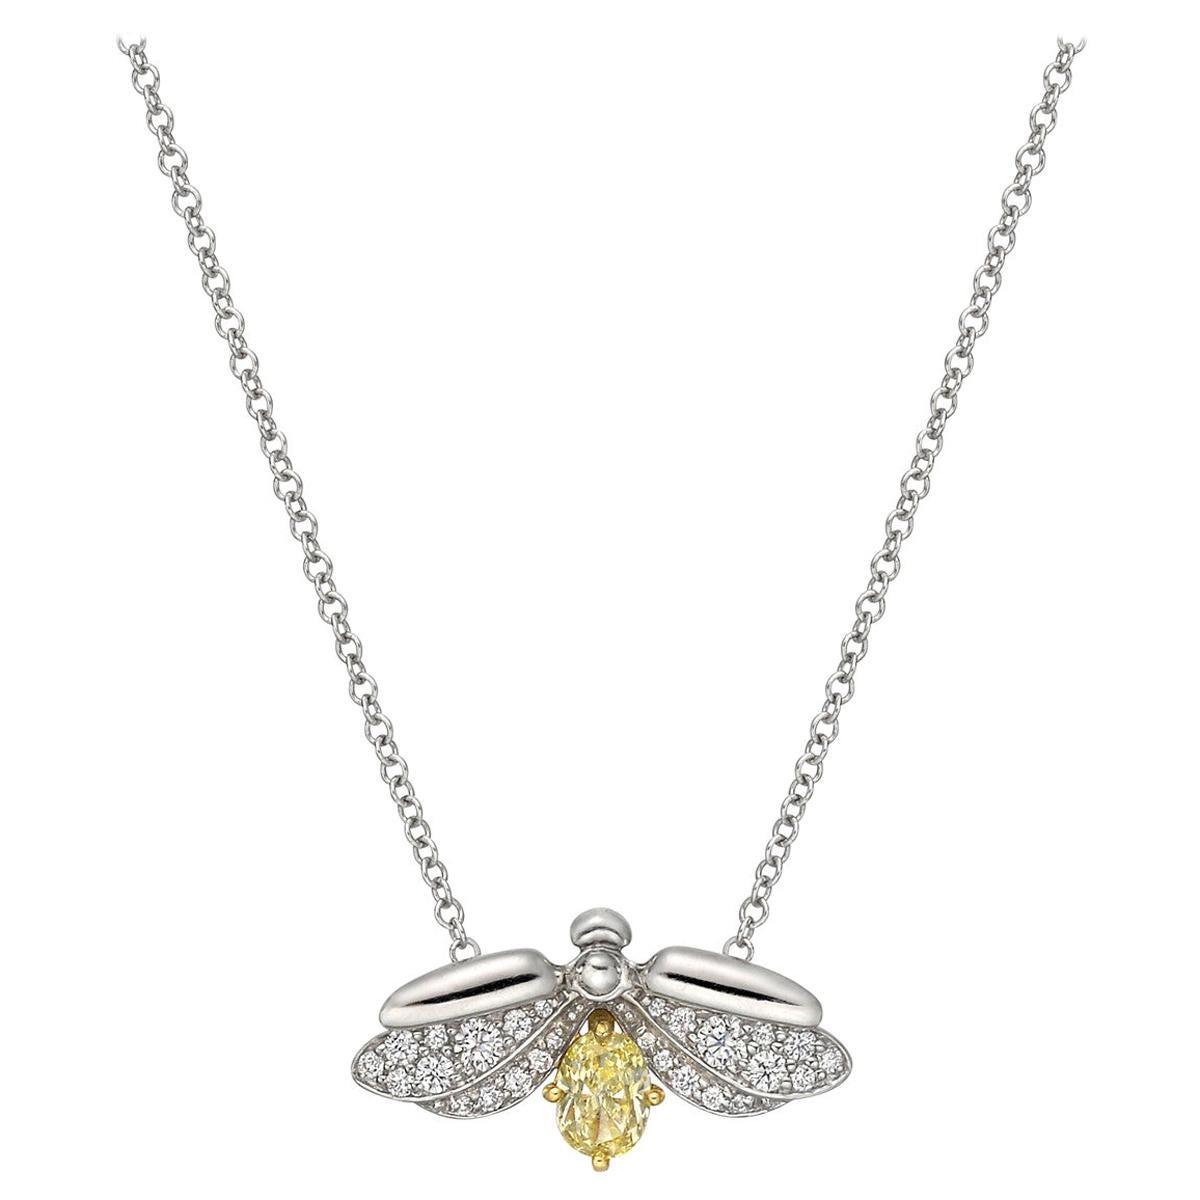 Tiffany & Co. "Paper Flowers" Yellow Diamond Firefly Pendant